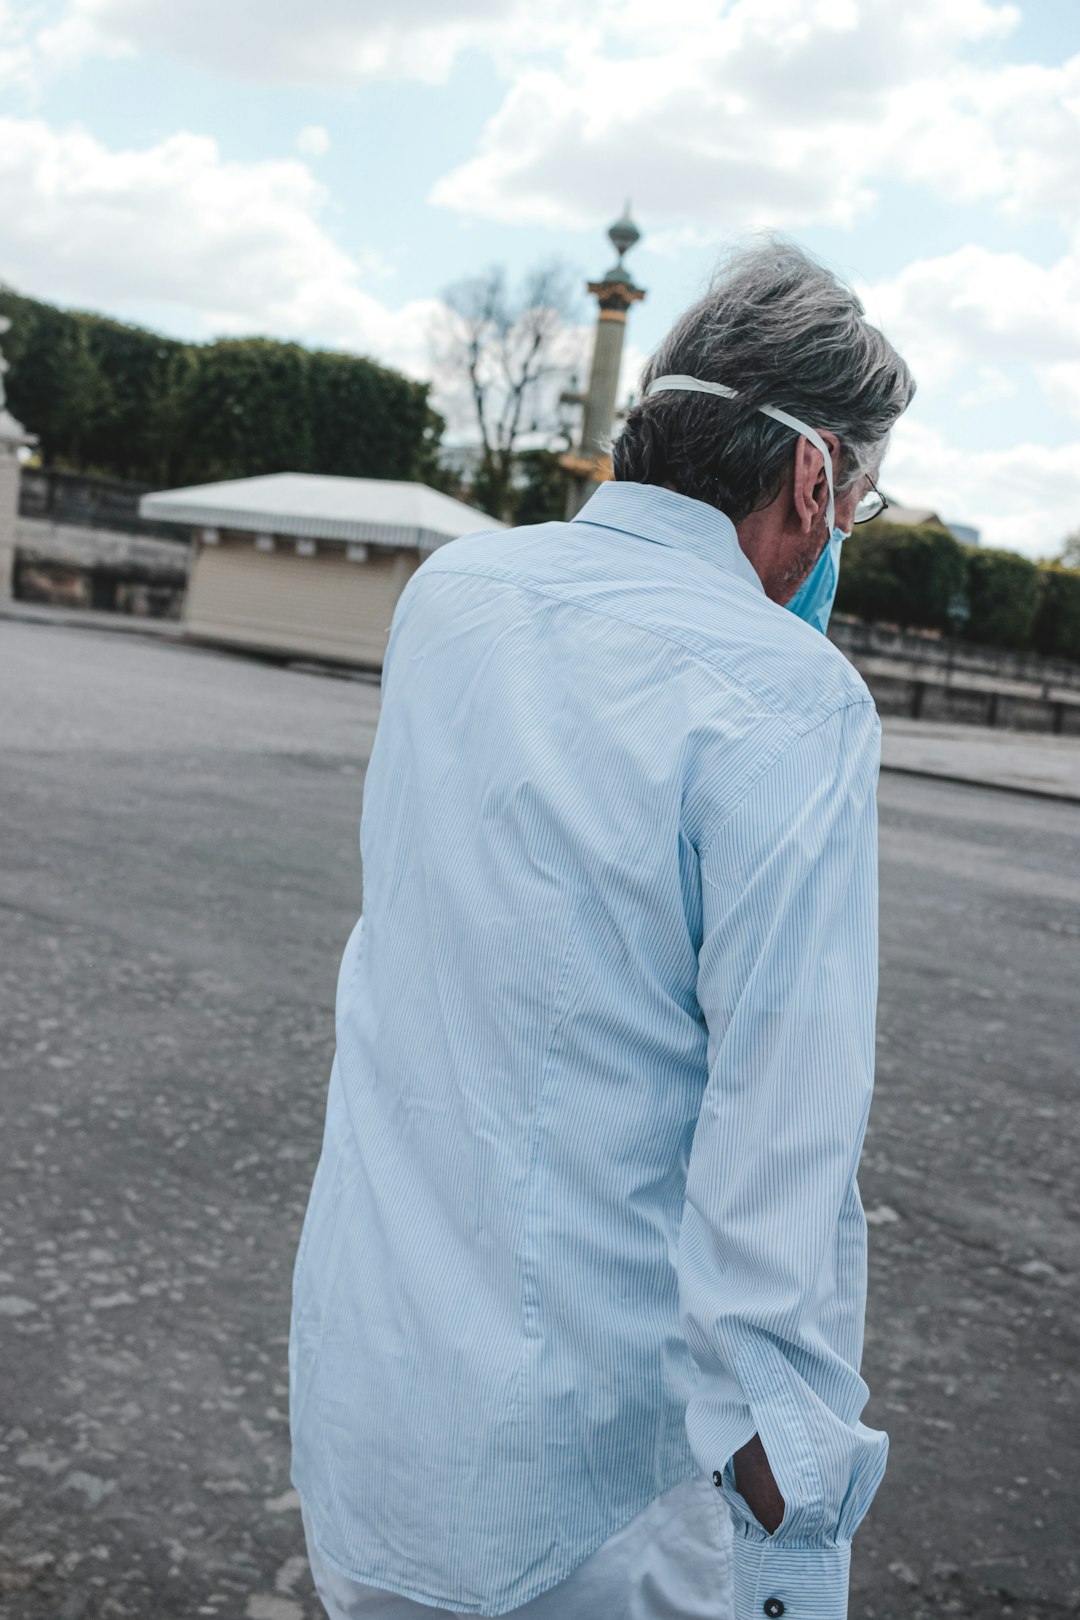 man in white dress shirt wearing blue sunglasses standing on sidewalk during daytime